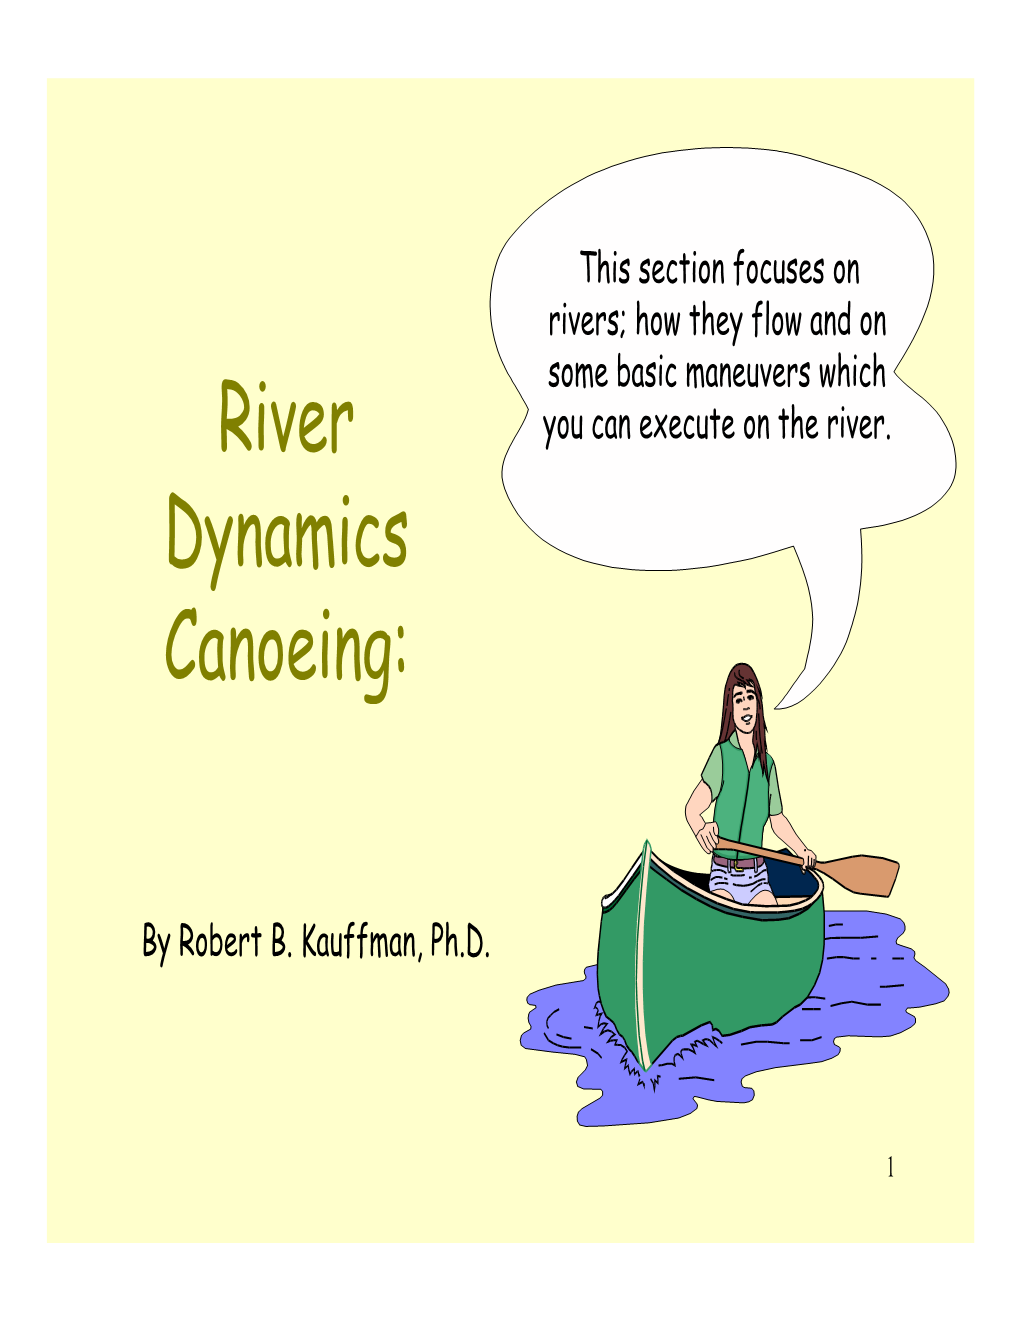 River Dynamics Canoeing